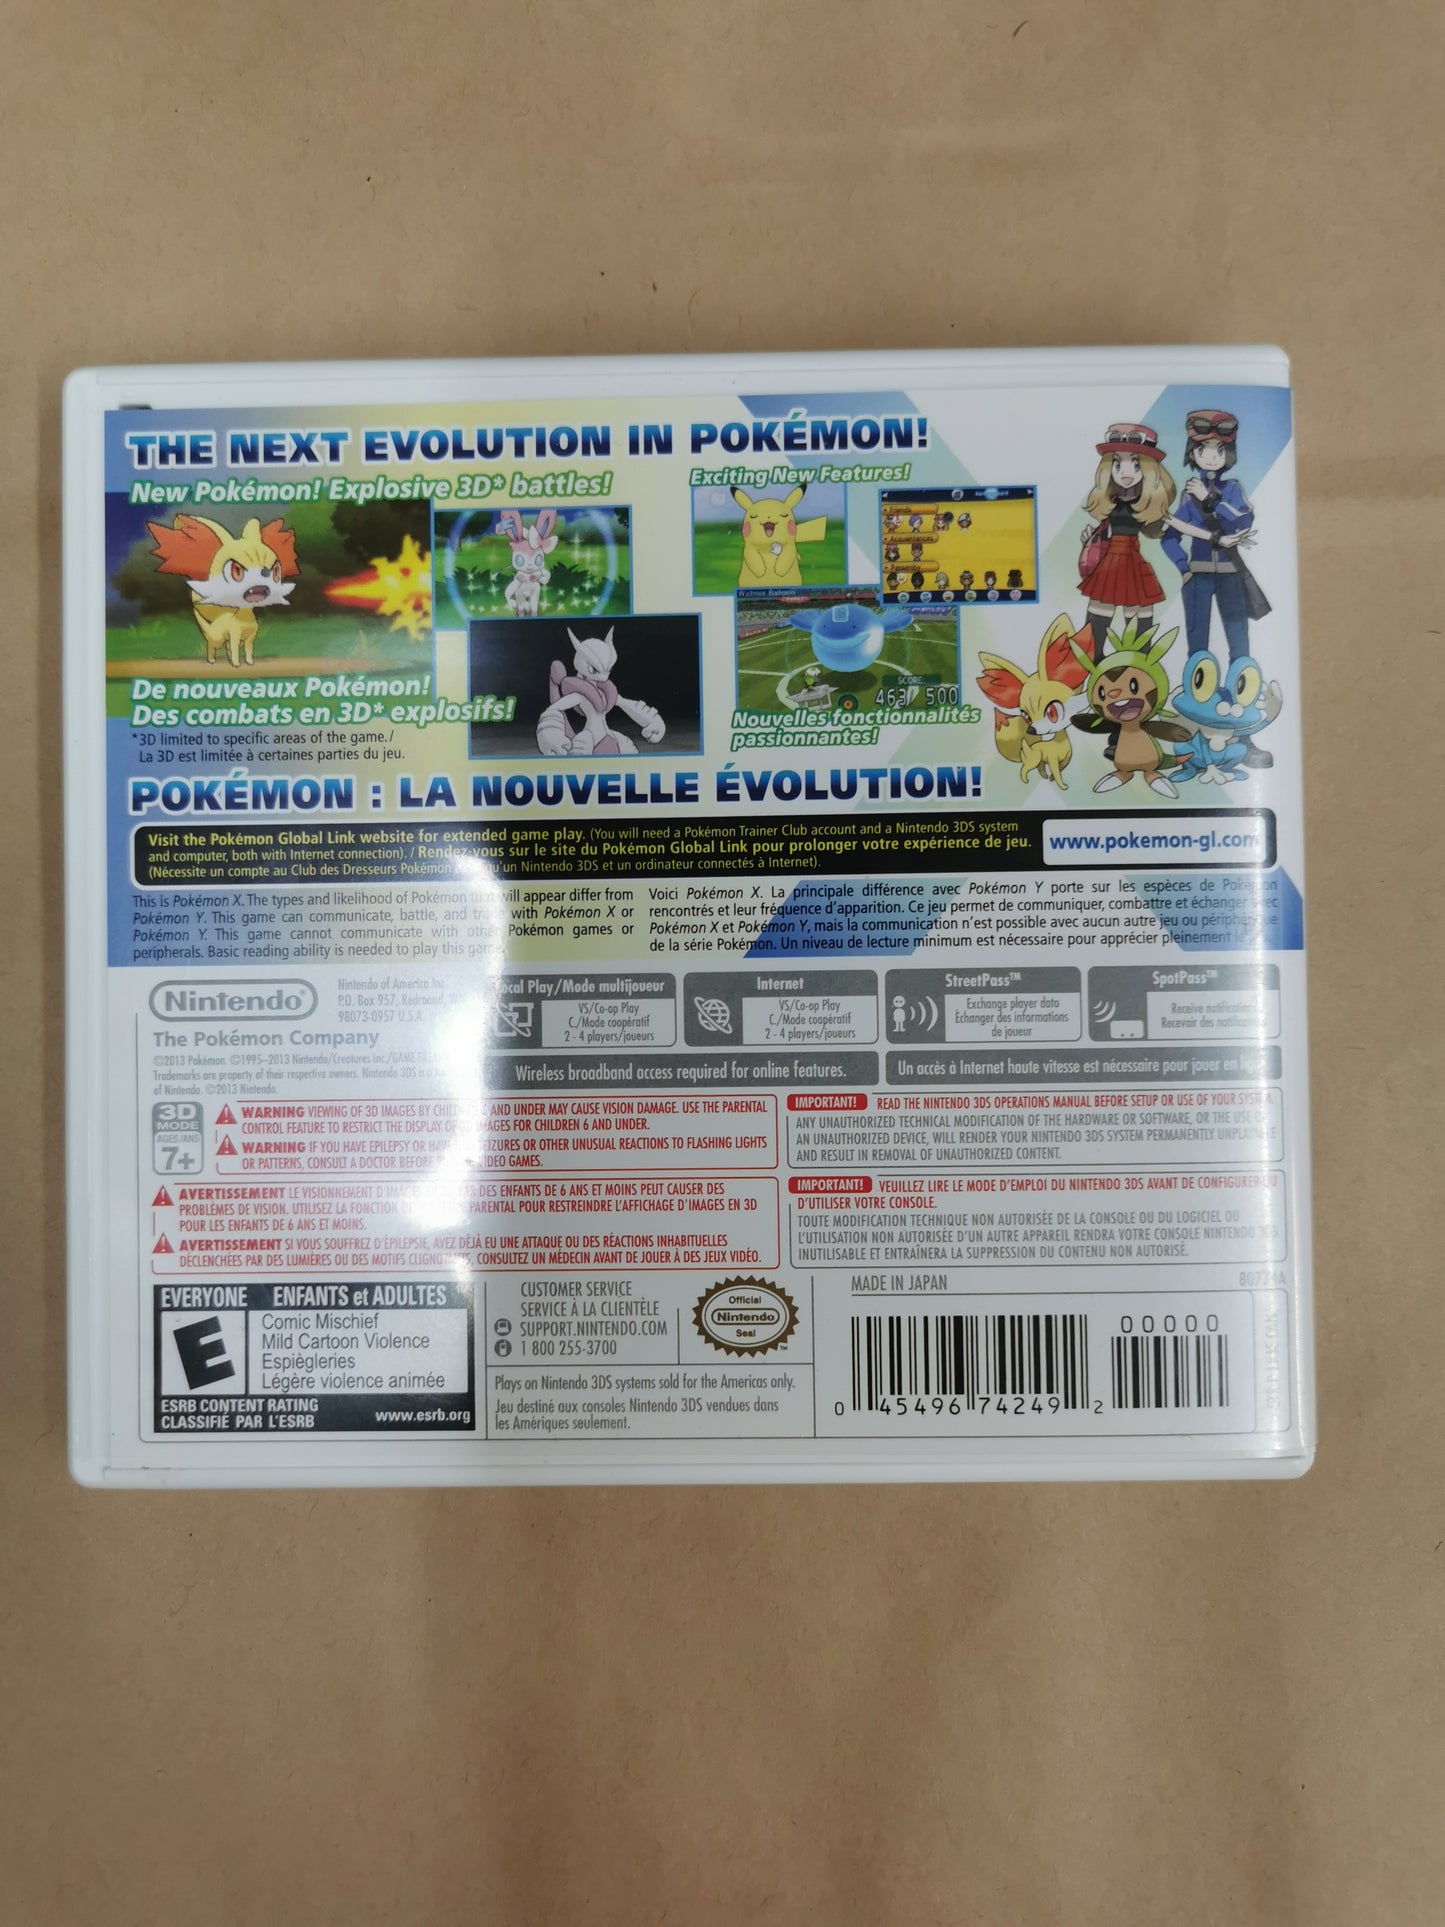 Pokemon X Nintendo 3DS